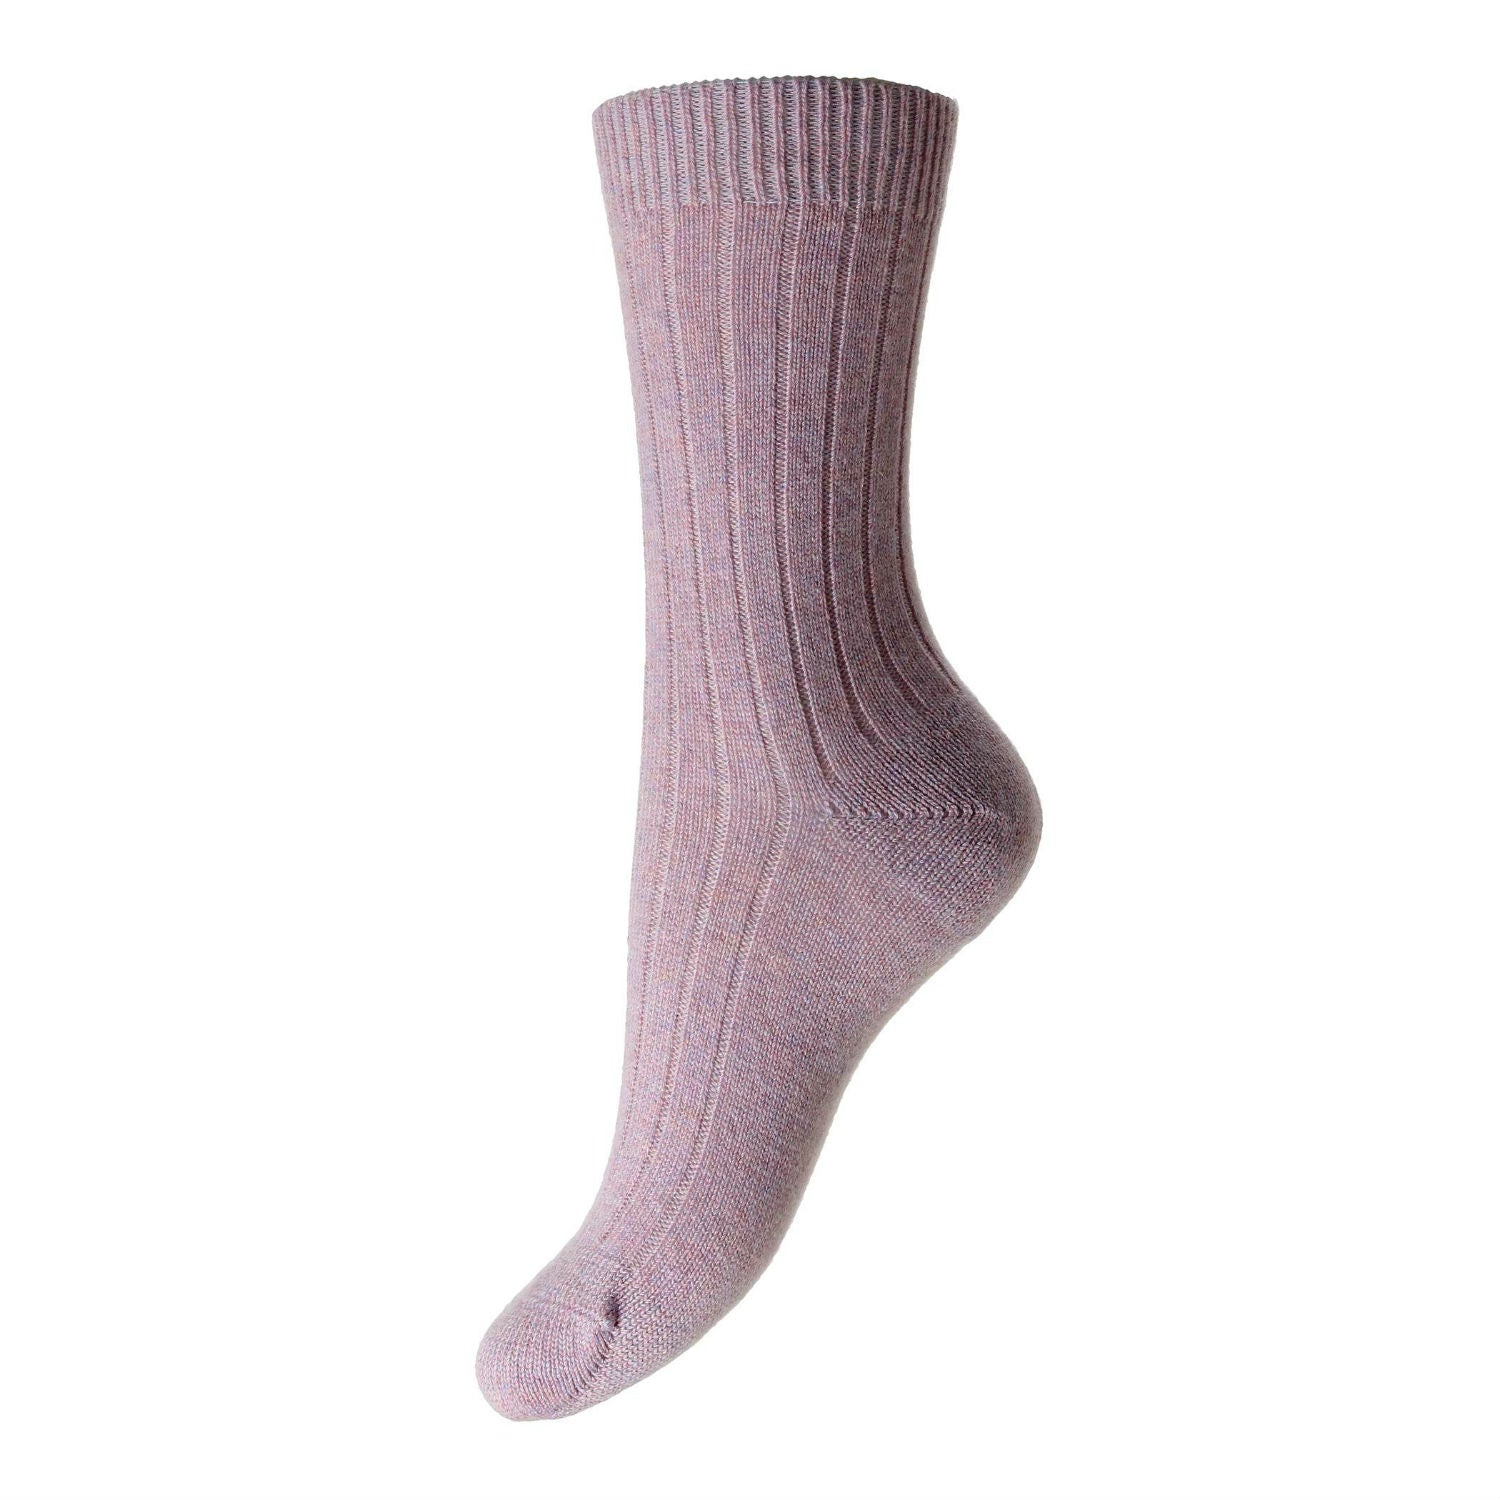 Pantherella women's socks - cashmere - misty pink marl